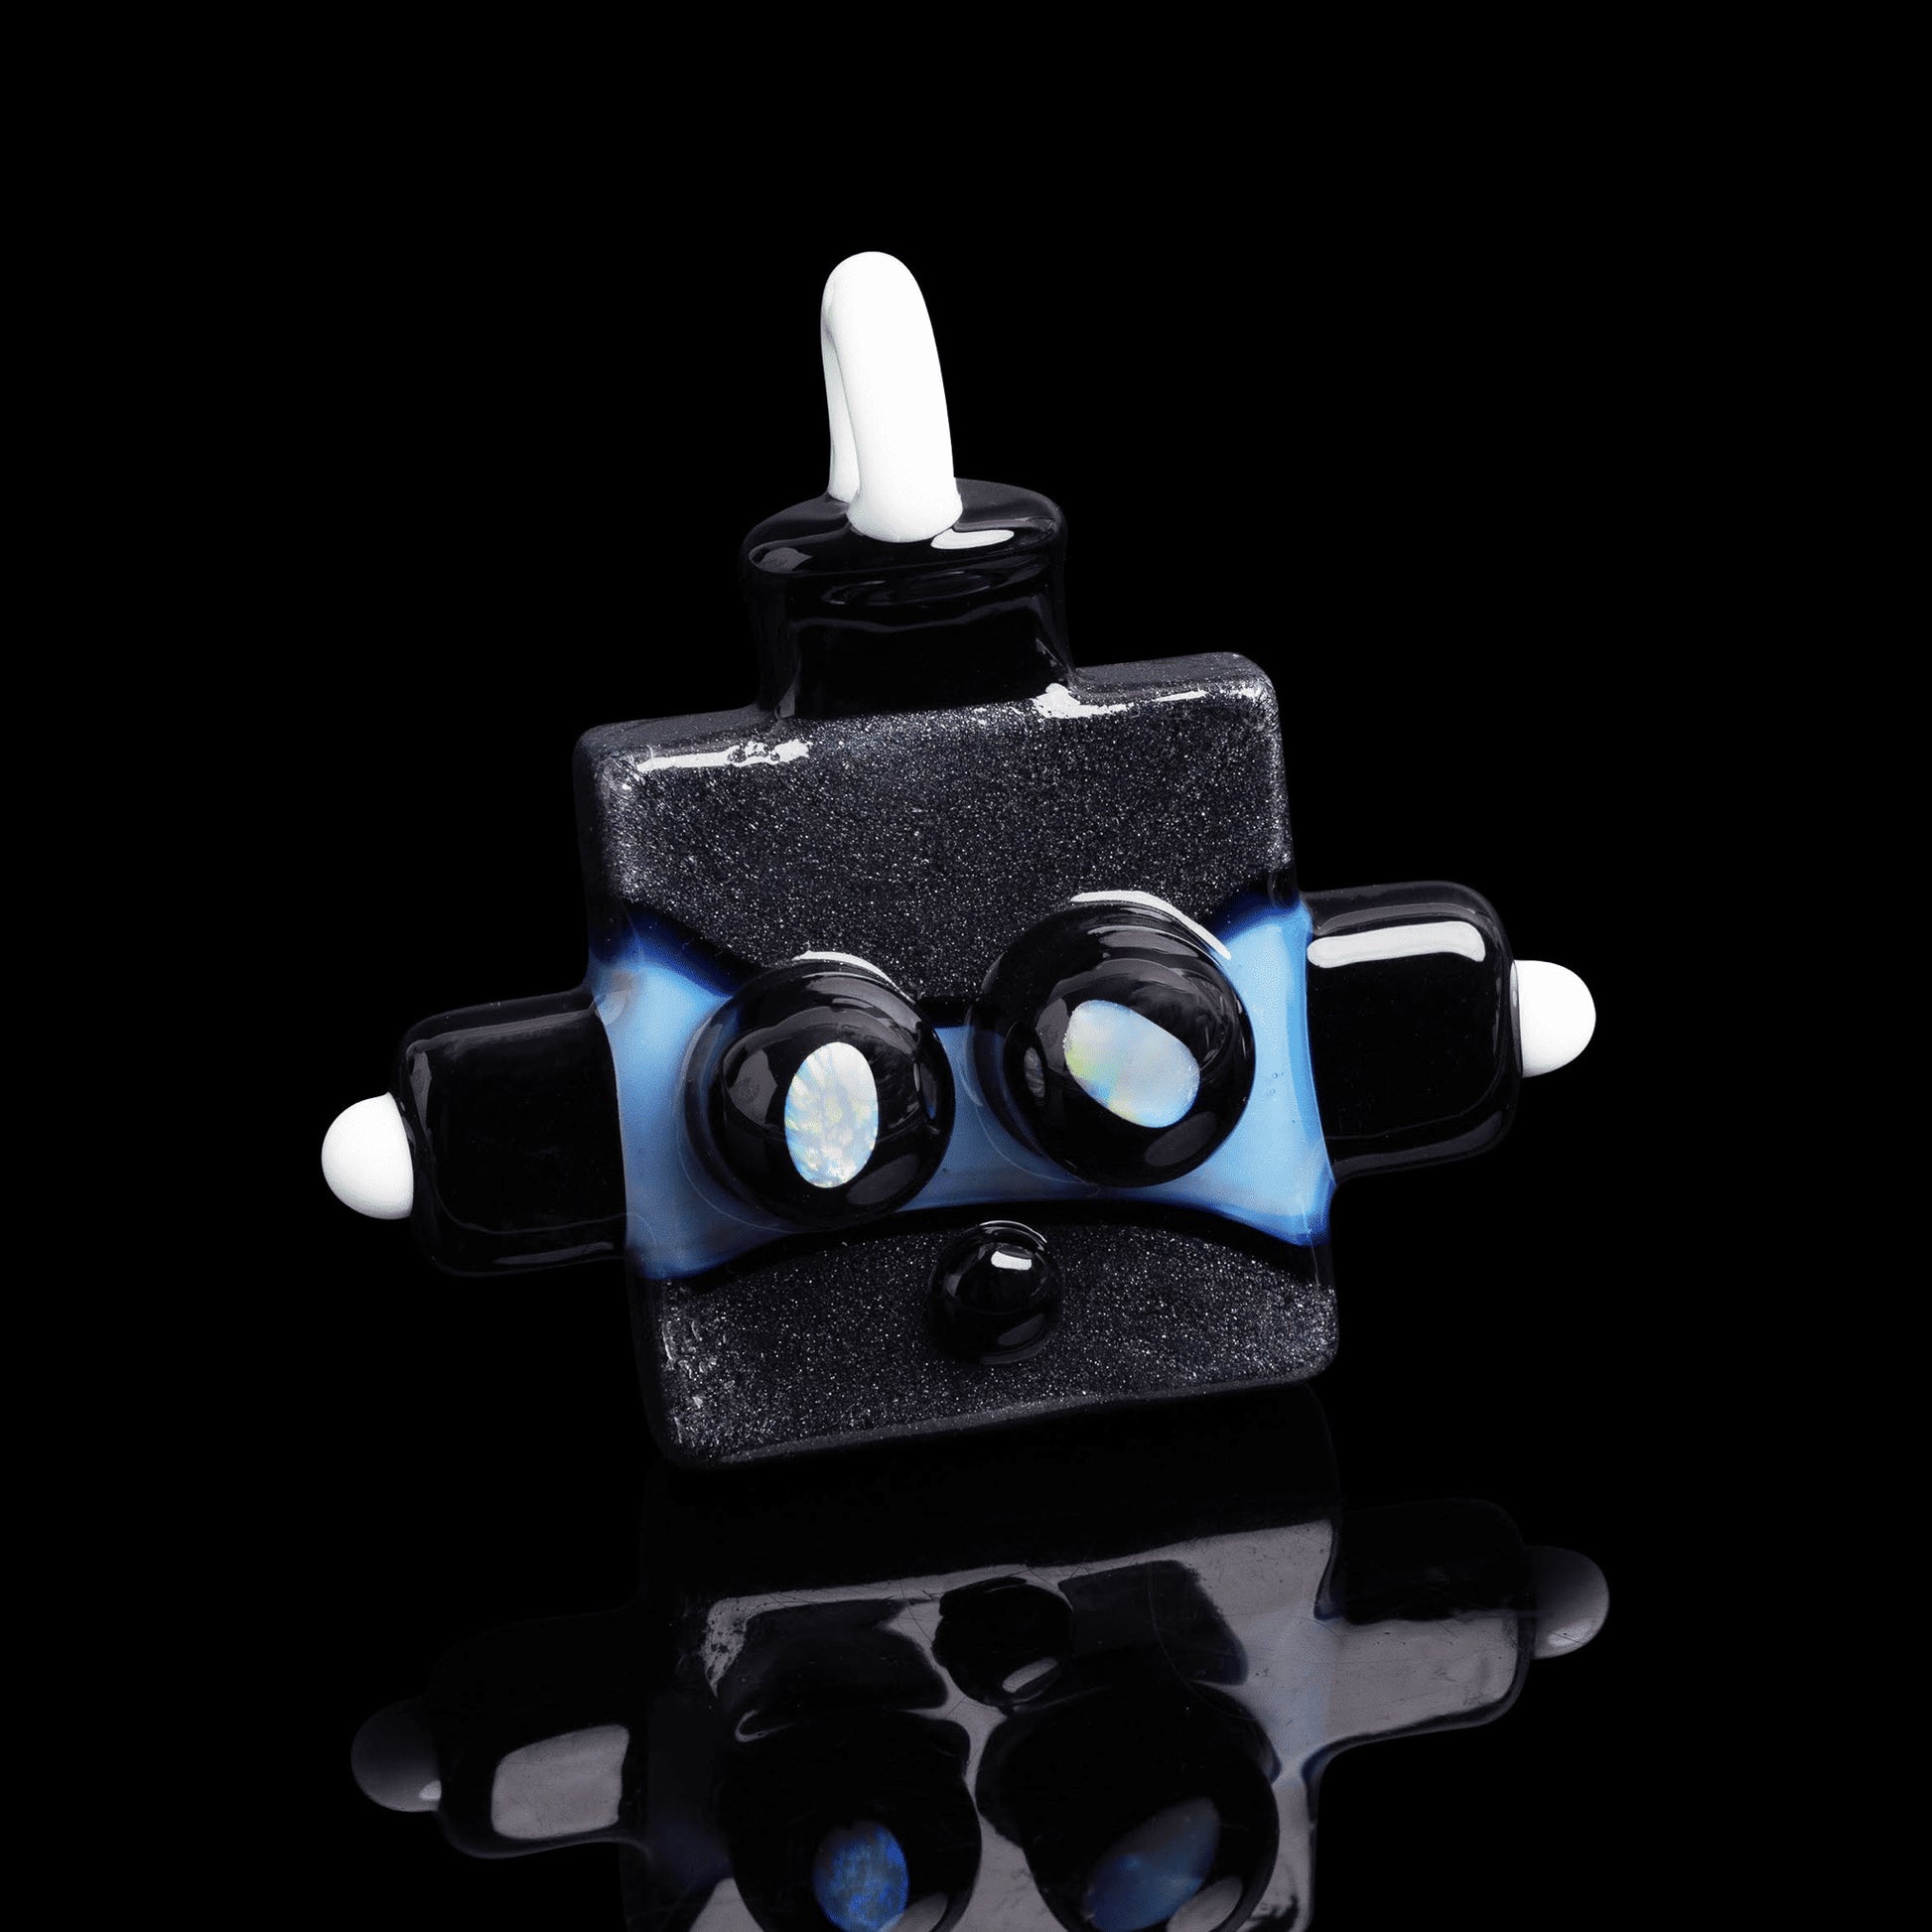 heady glass pendant - Robot Pendant by Torchress